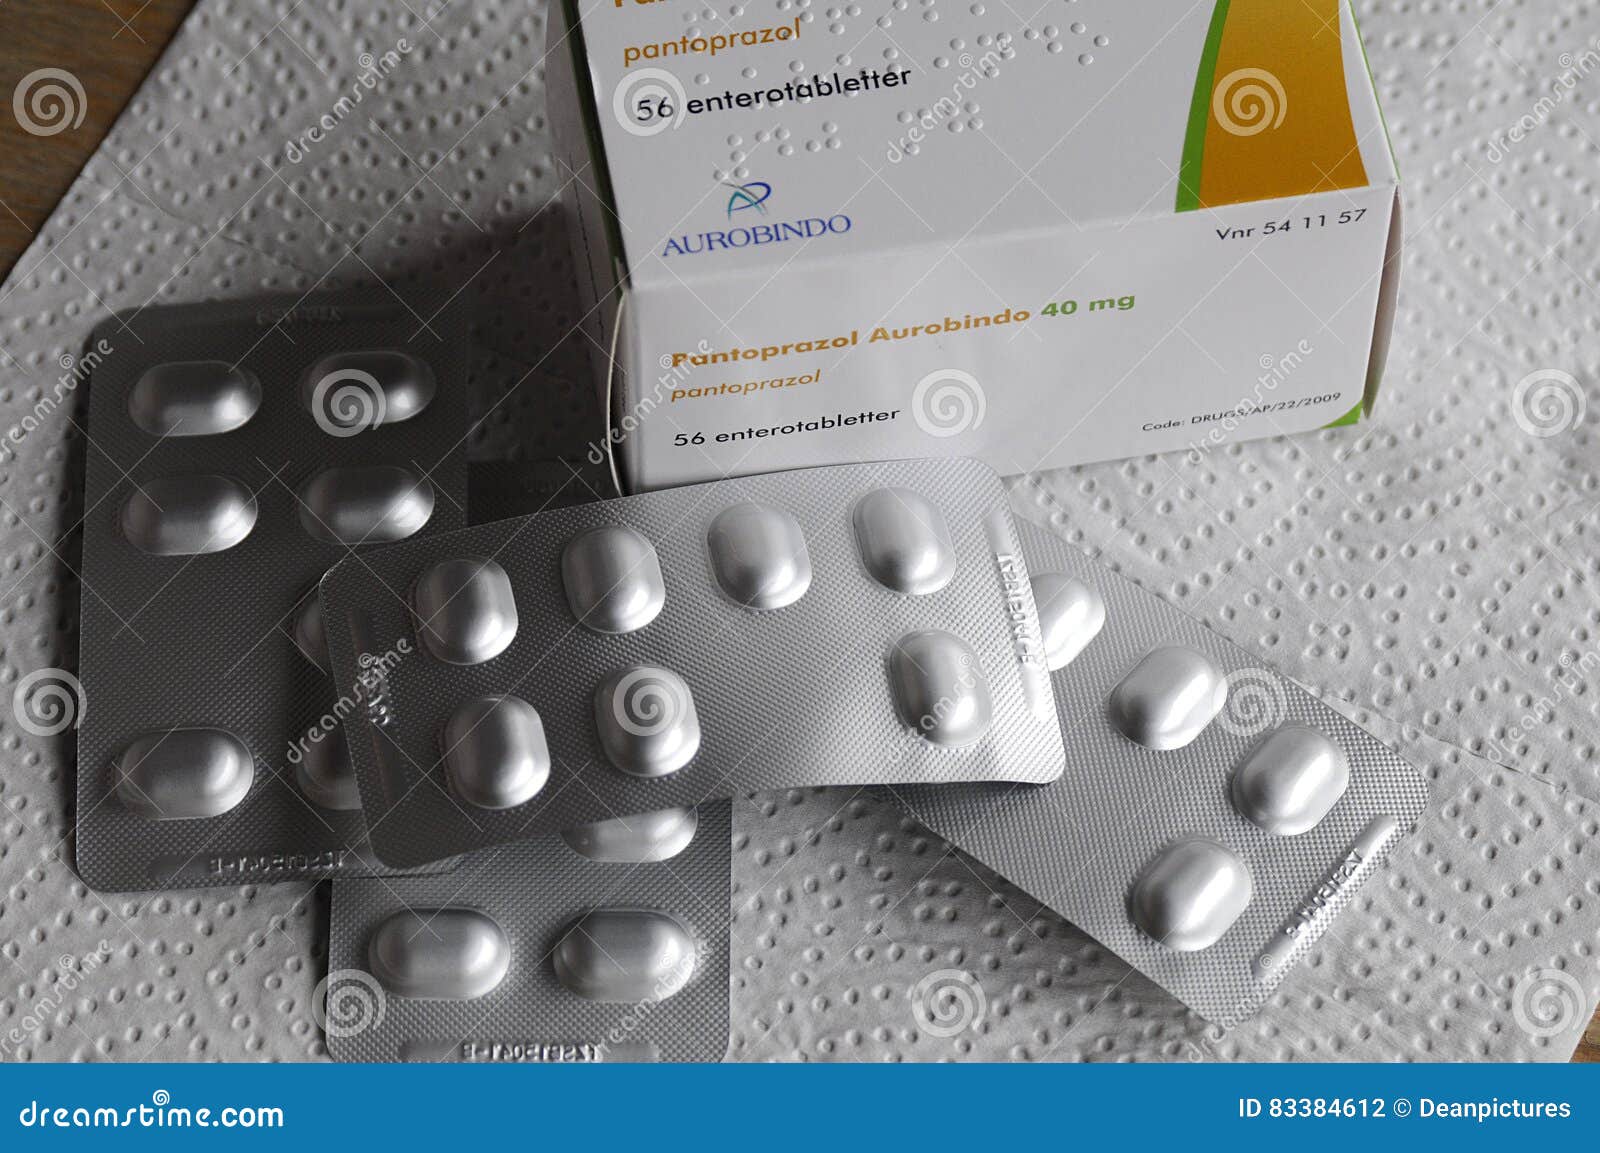 PATROPRAZOL AUROBINDO 40 Gm 56 ENTERROTABLETES Photography - Image of denmark, pills: